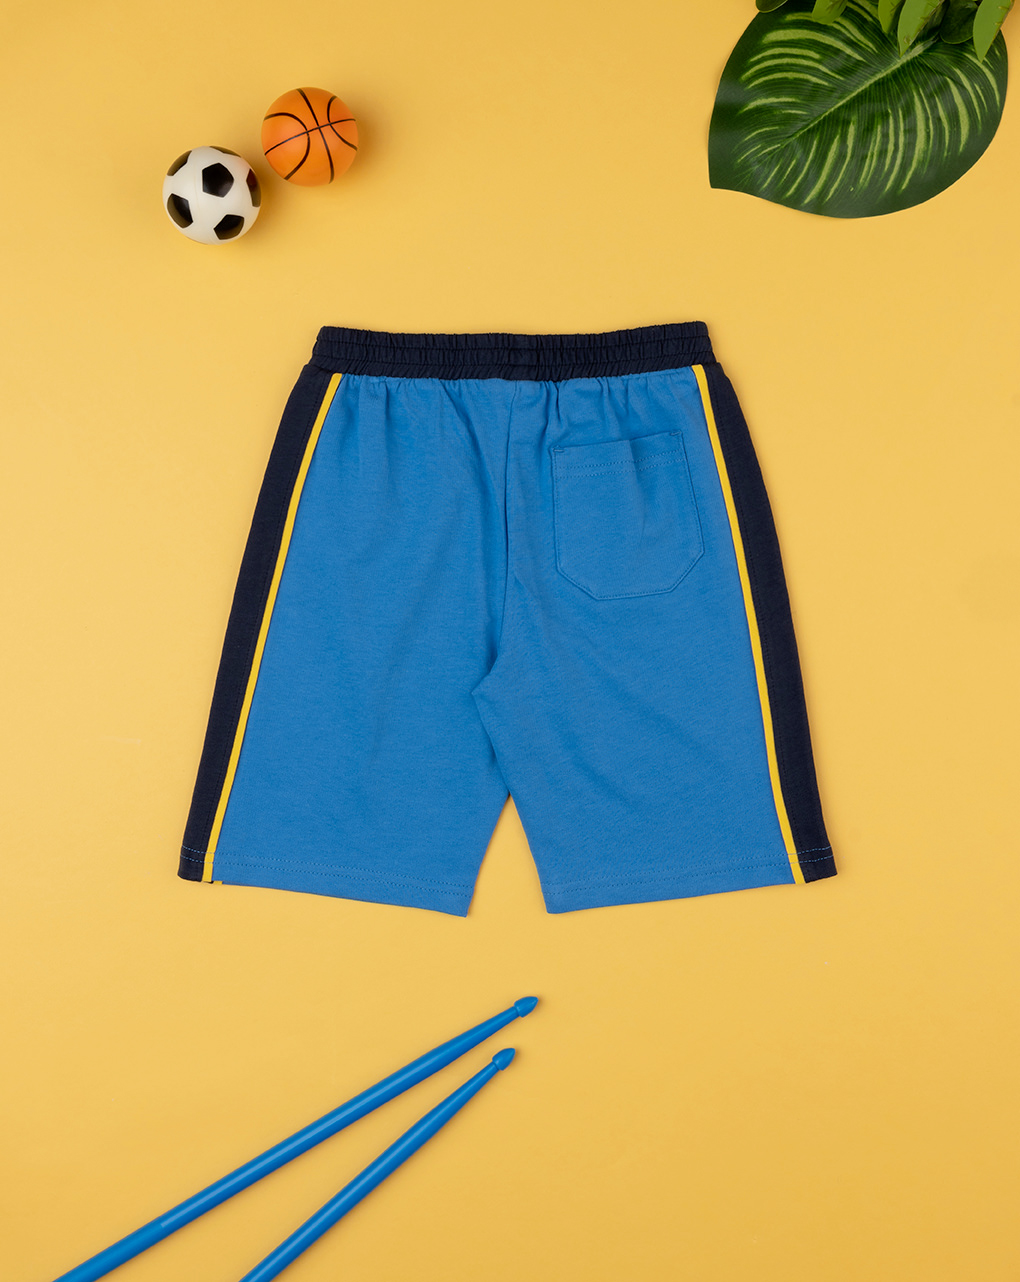 Pantalones cortos bambino french terry azzurro - Prénatal